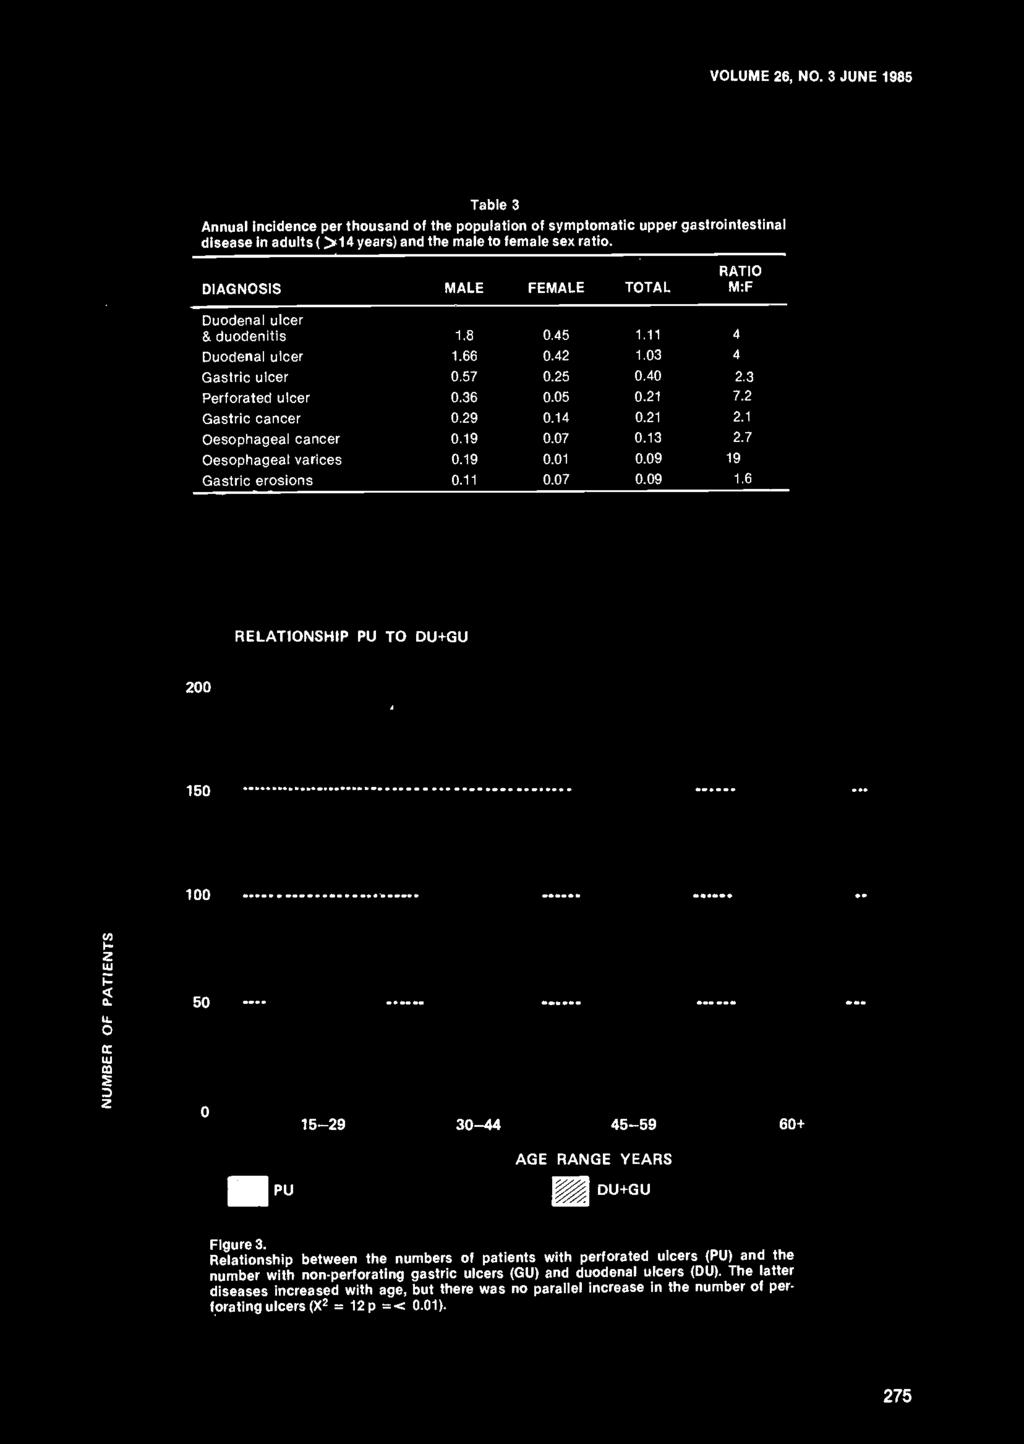 29 0.14 0.21 2.1 Oesophageal cancer 0.19 0.07 0.13 2.7 Oesophageal varices 0.19 0.01 0.09 19 Gastric erosions 0.11 0.07 0.09 1.6 RELATIONSHIP PU TO DU+GU 200 150 100 50 0 15-29 30-44 45-59 AGE RANGE YEARS 60+ PU DU+GU Figure 3.